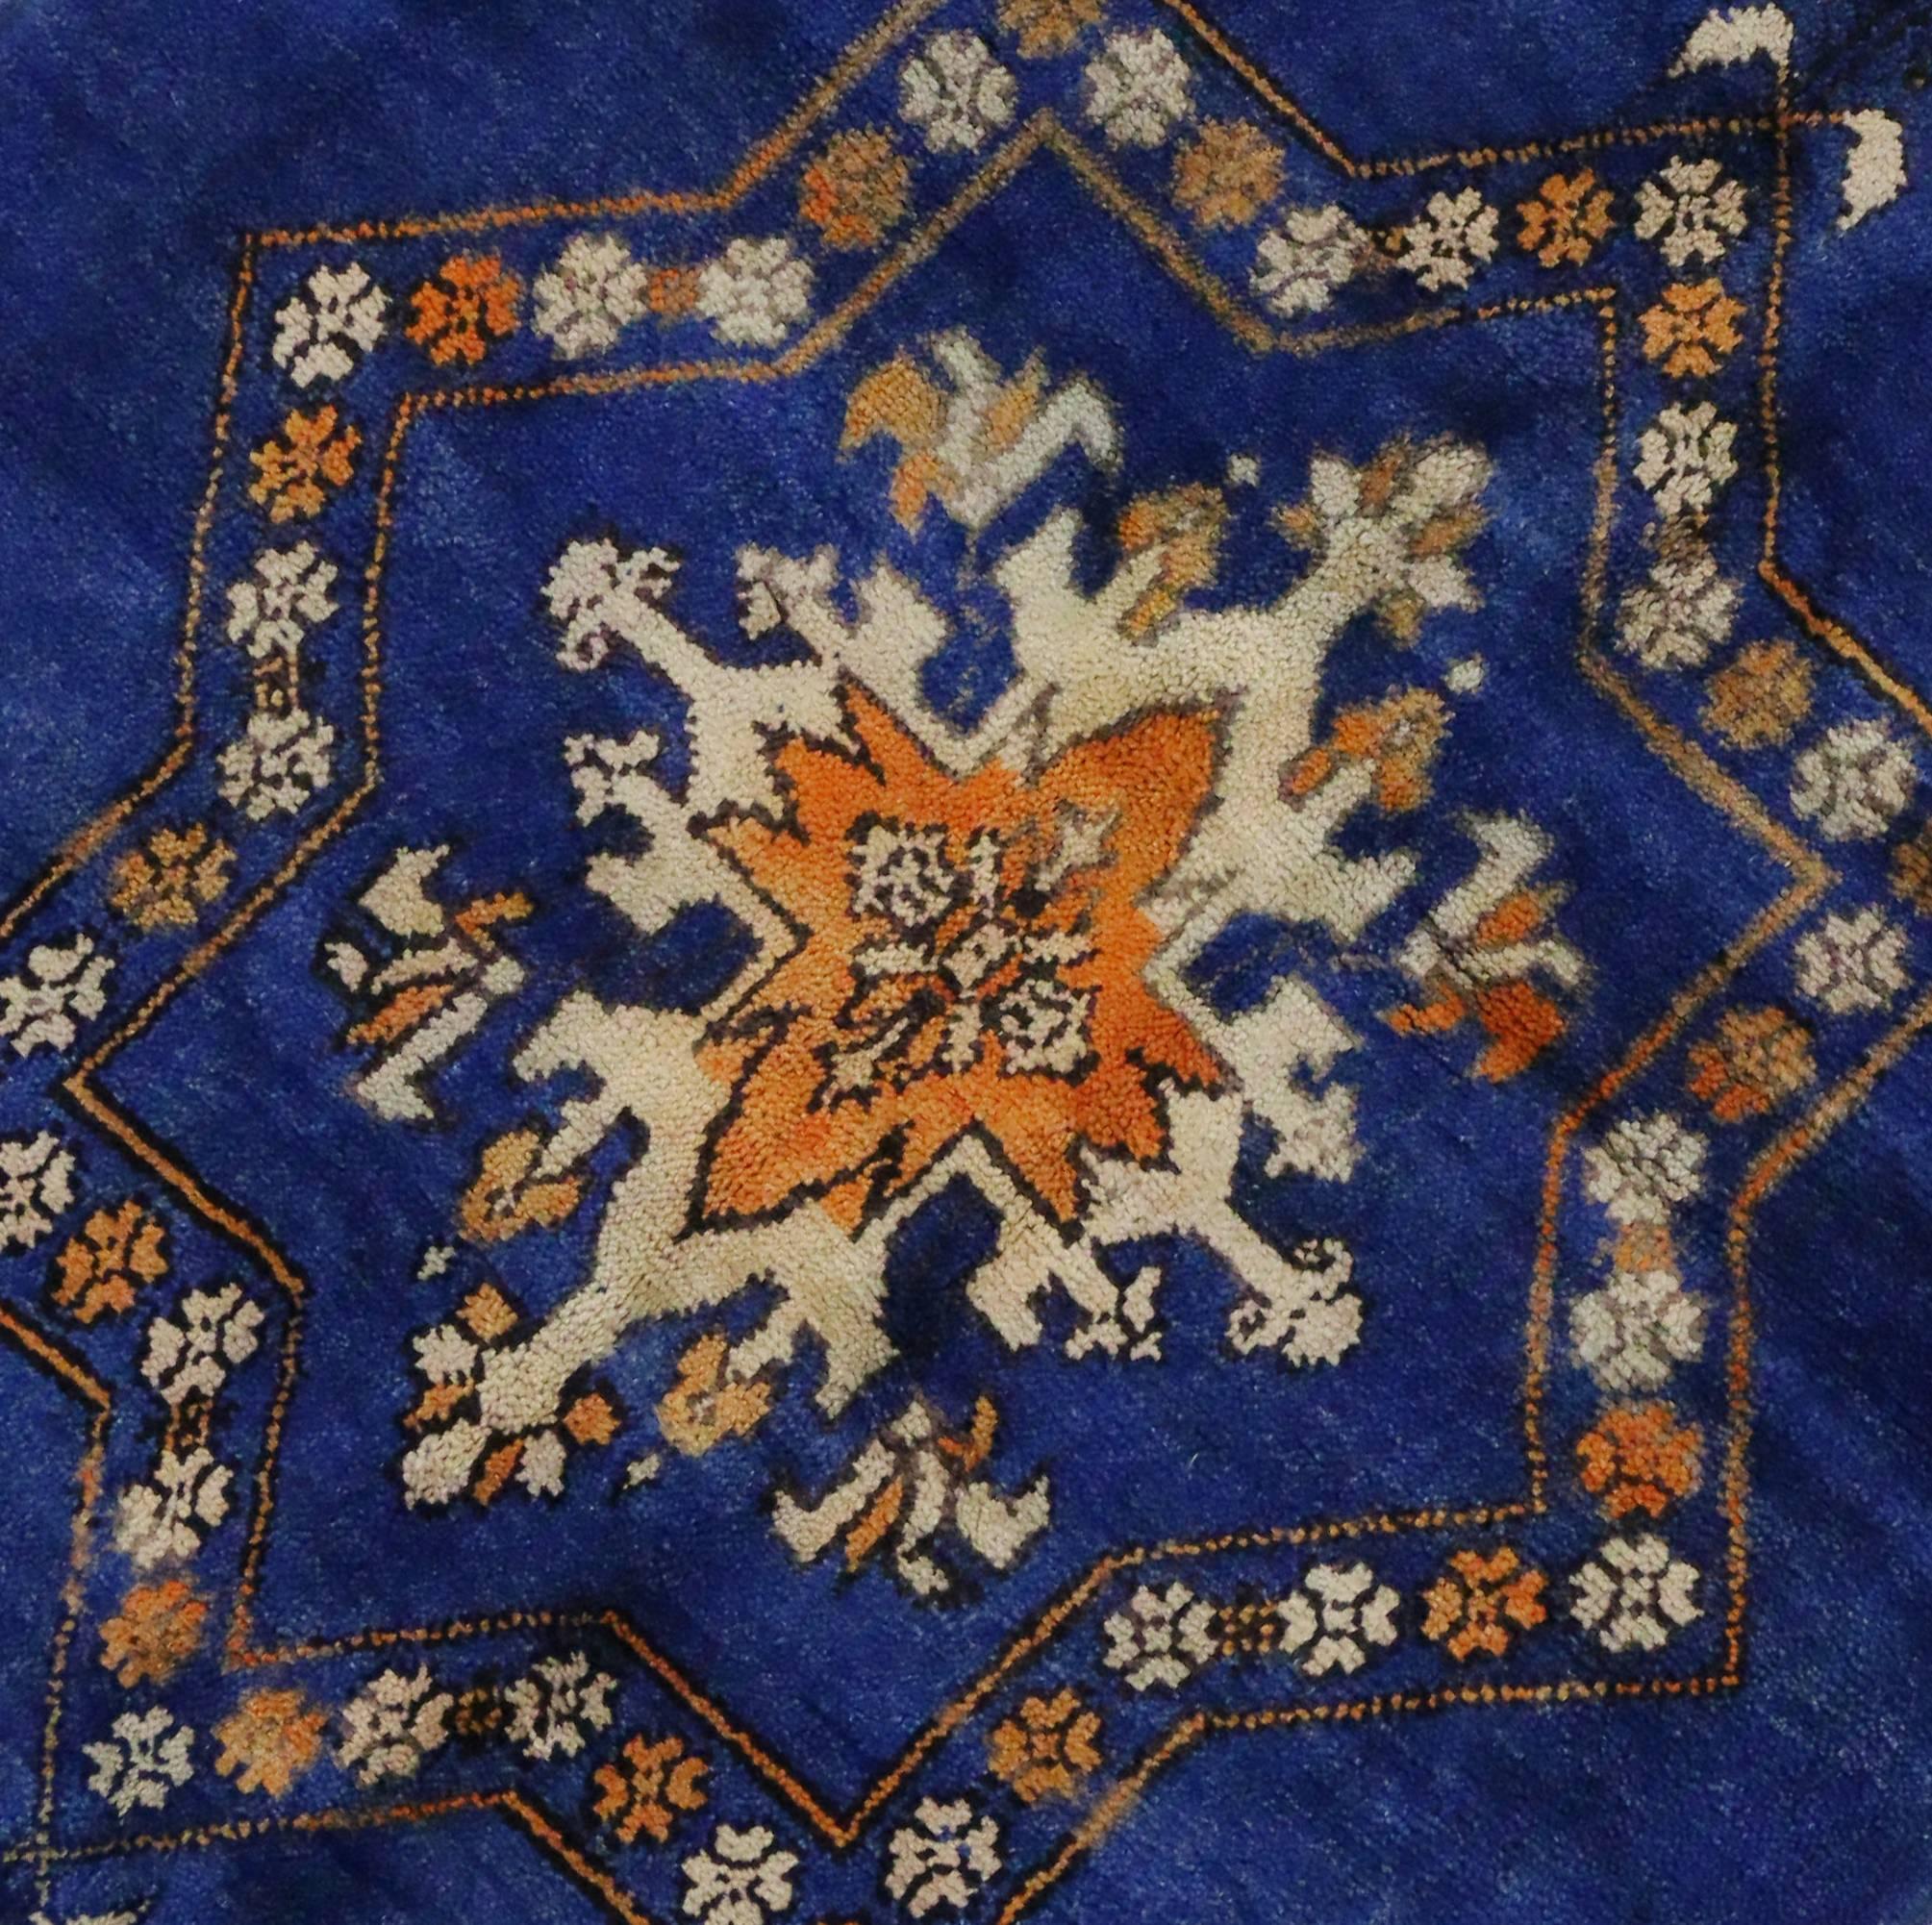 Bohemian Vintage Berber Moroccan Rug in Cobalt Blue with Modern Tribal Design